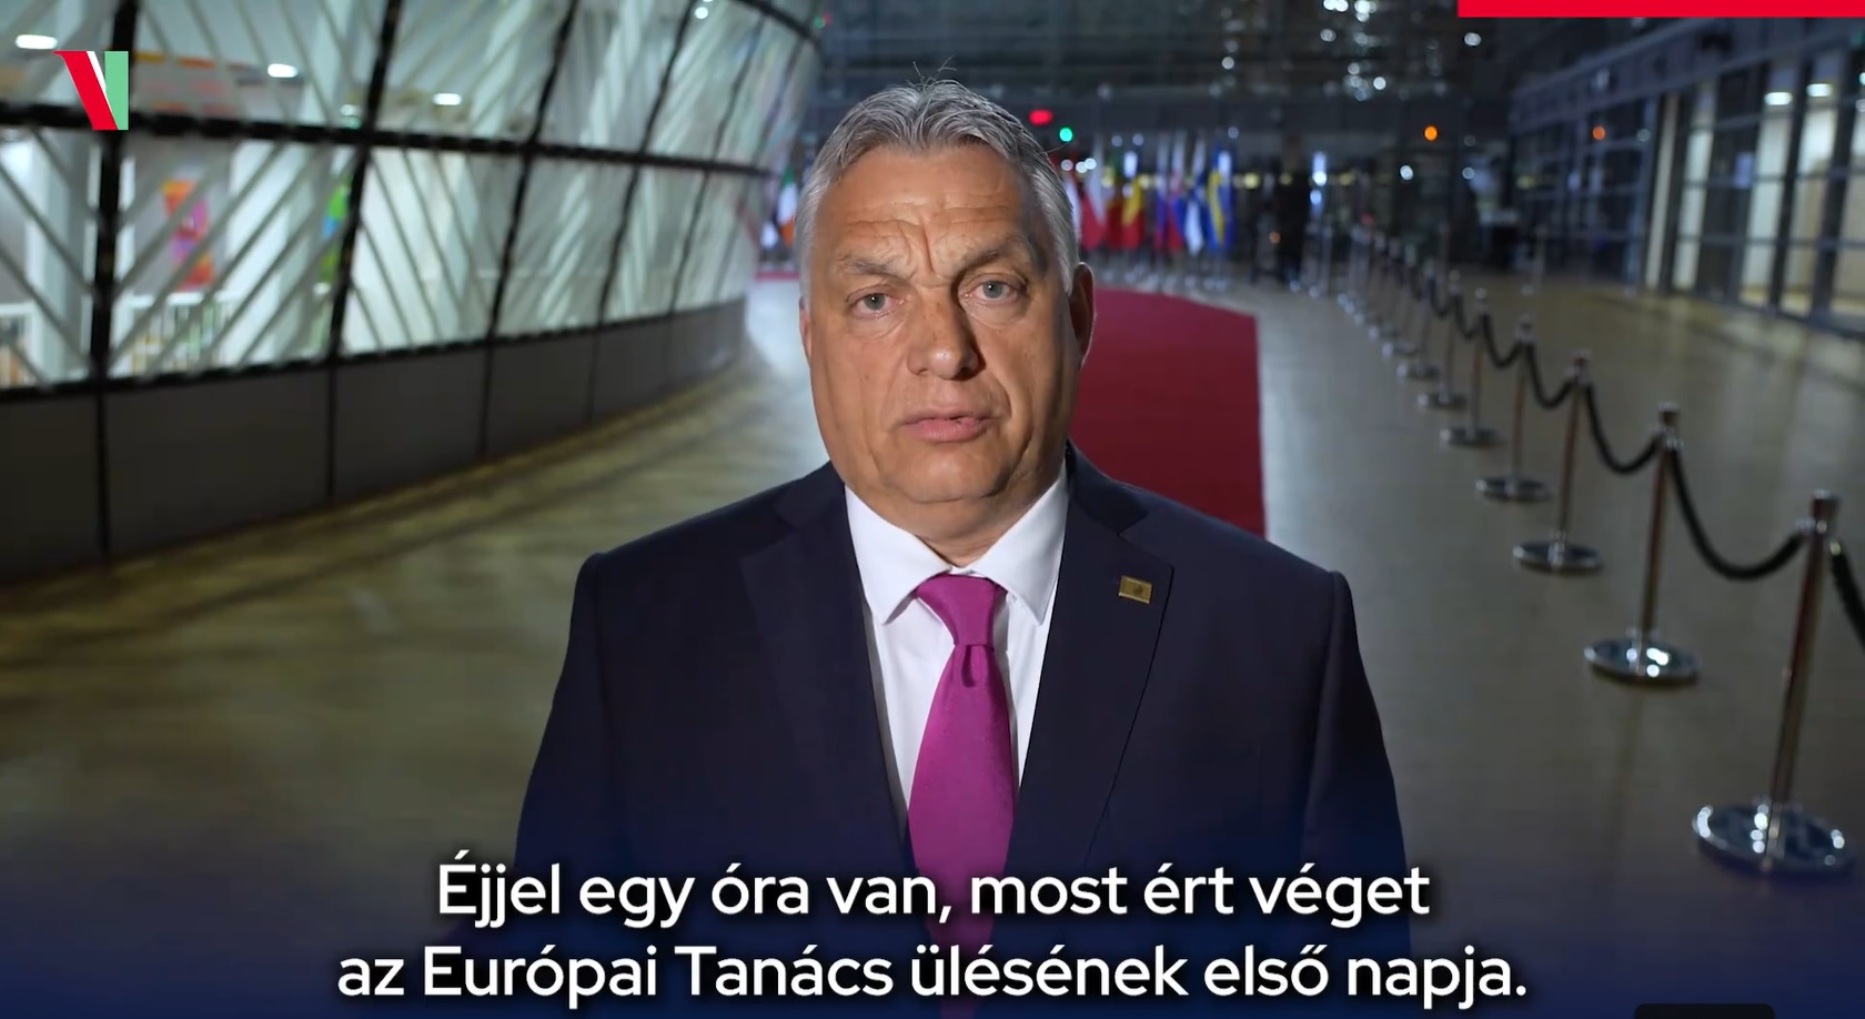 Viktor Orbán à Bruxelles le 31 mai 2022